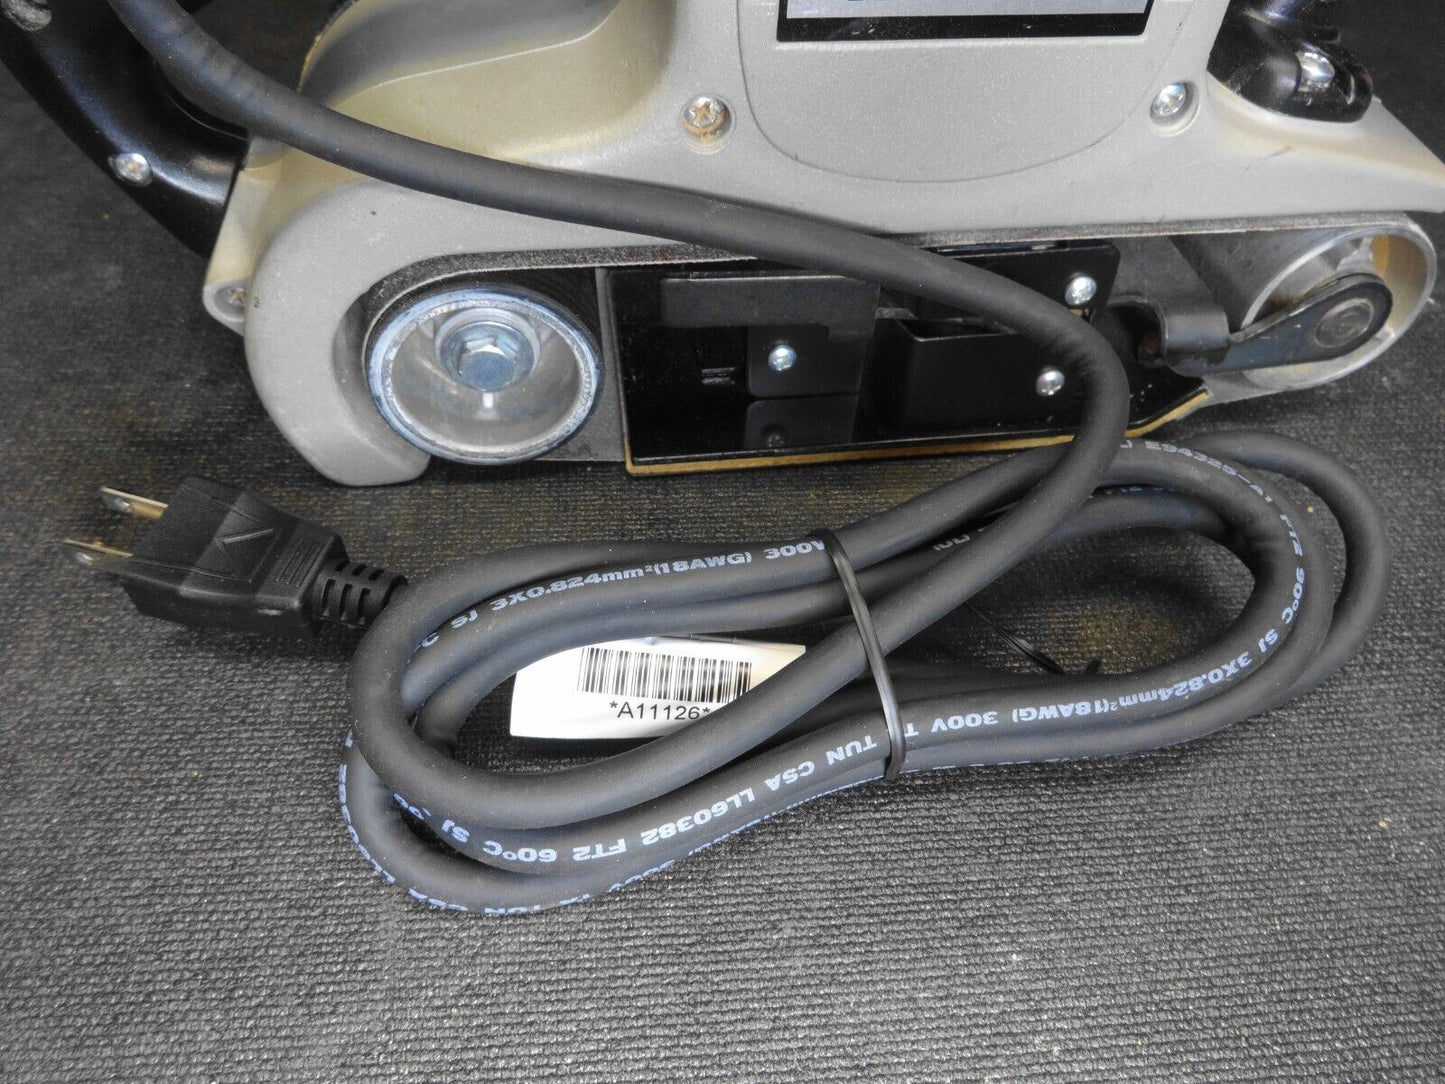 Porter Cable Belt Sander 352VS w/ New Power Cord Installed - No Dust Bag